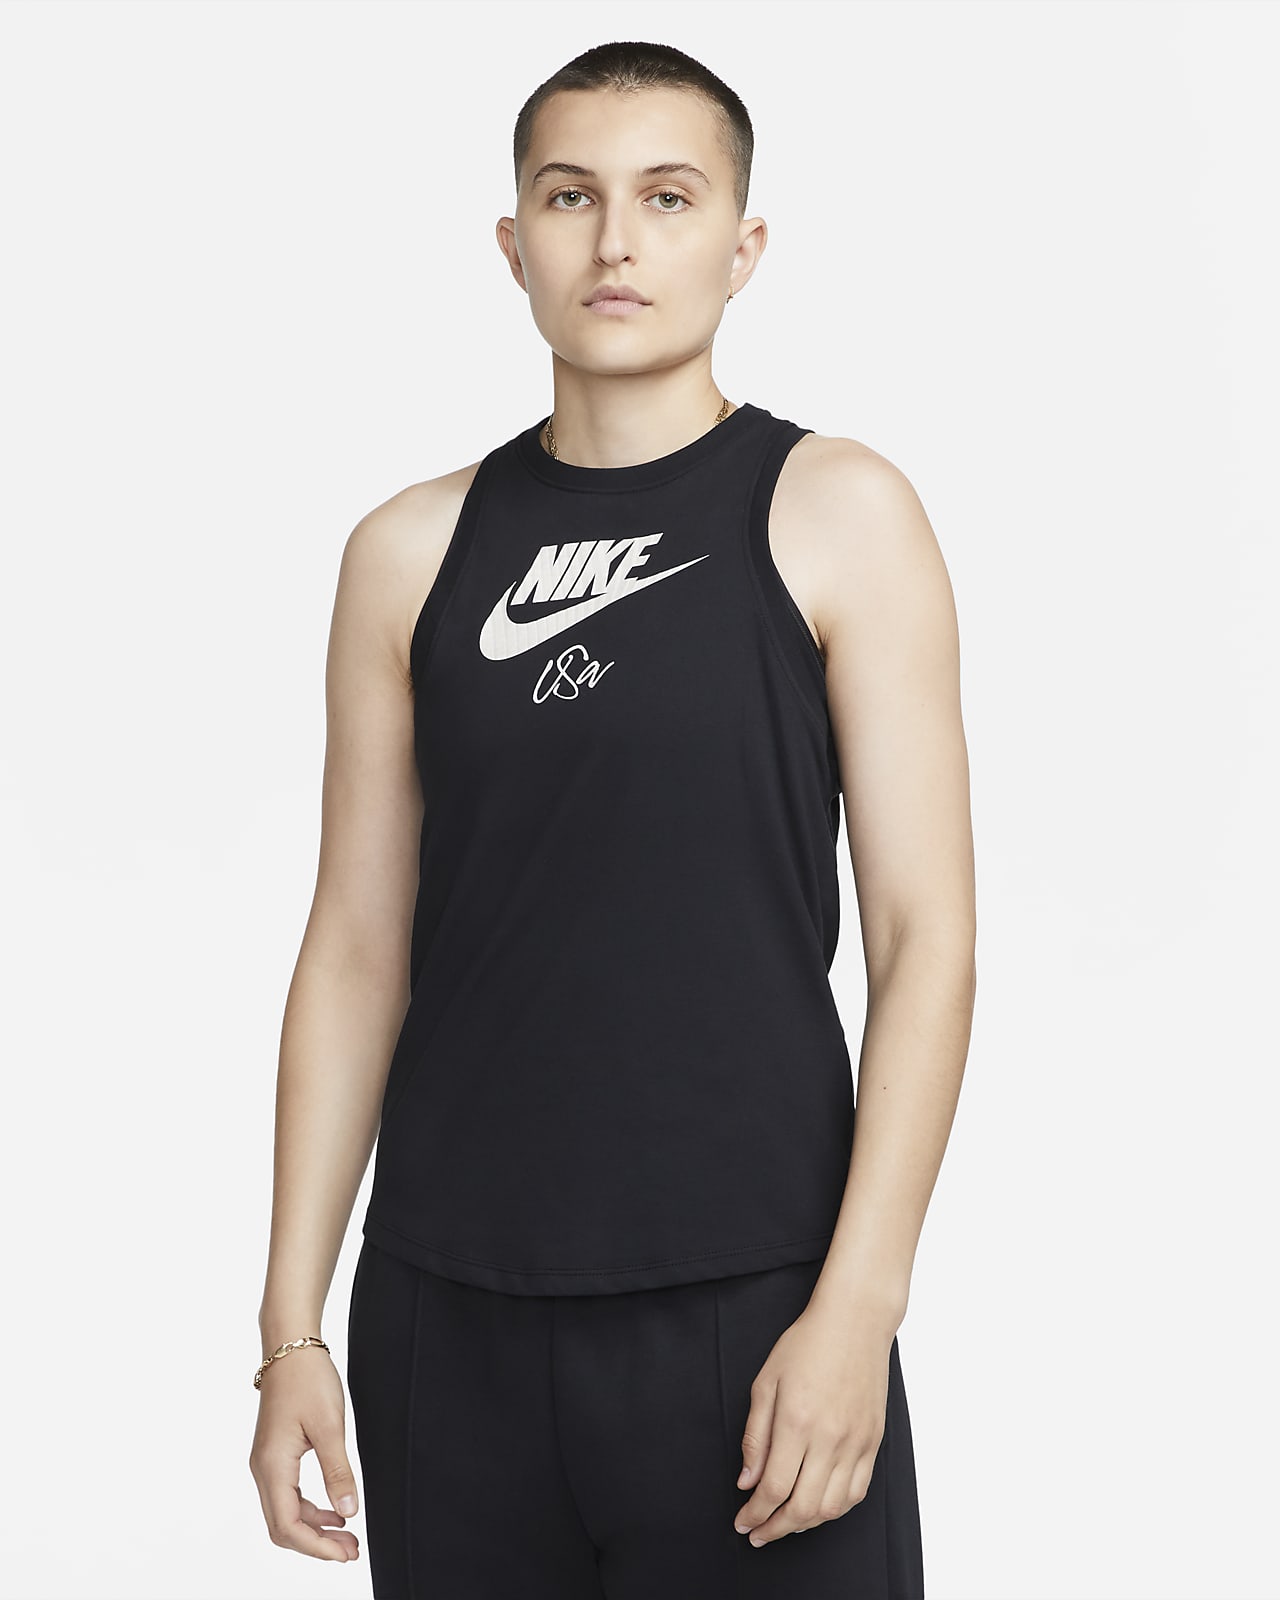 U.S. Women's Nike Tank Top